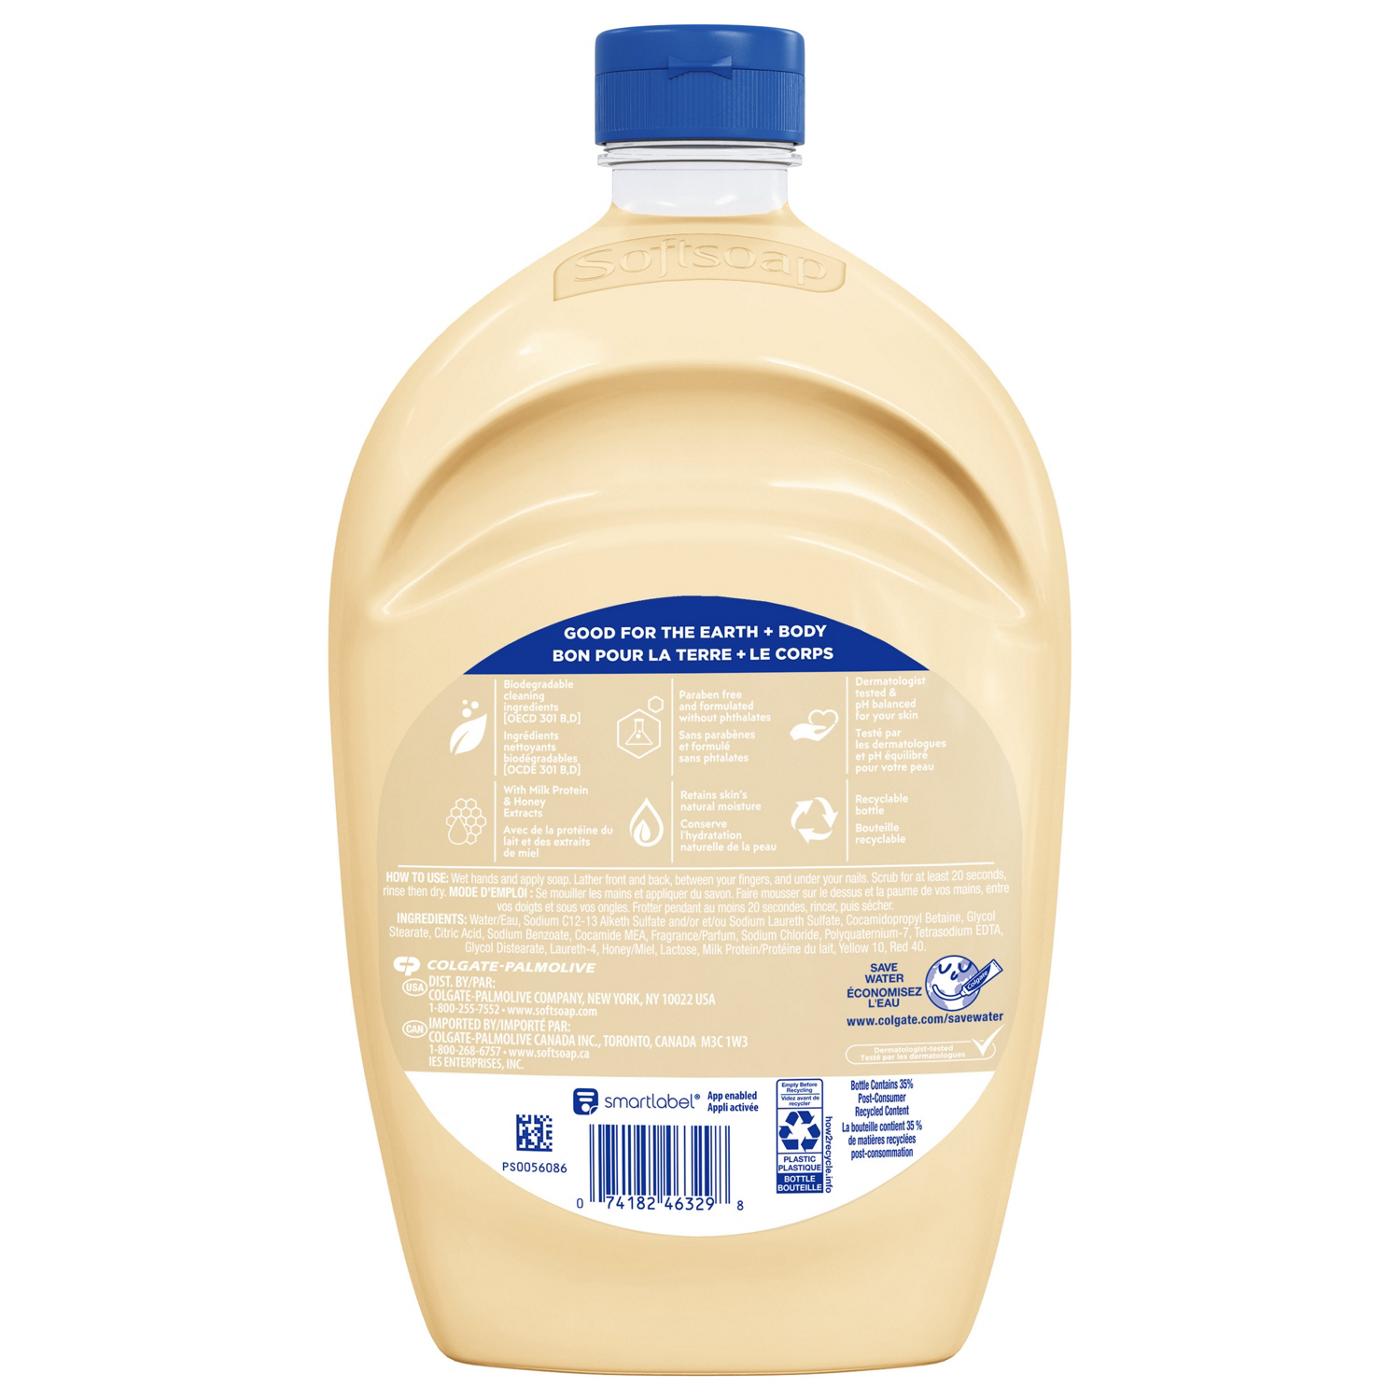 Softsoap Moisturizing Hand Soap Refill - Milk & Golden Honey; image 2 of 2